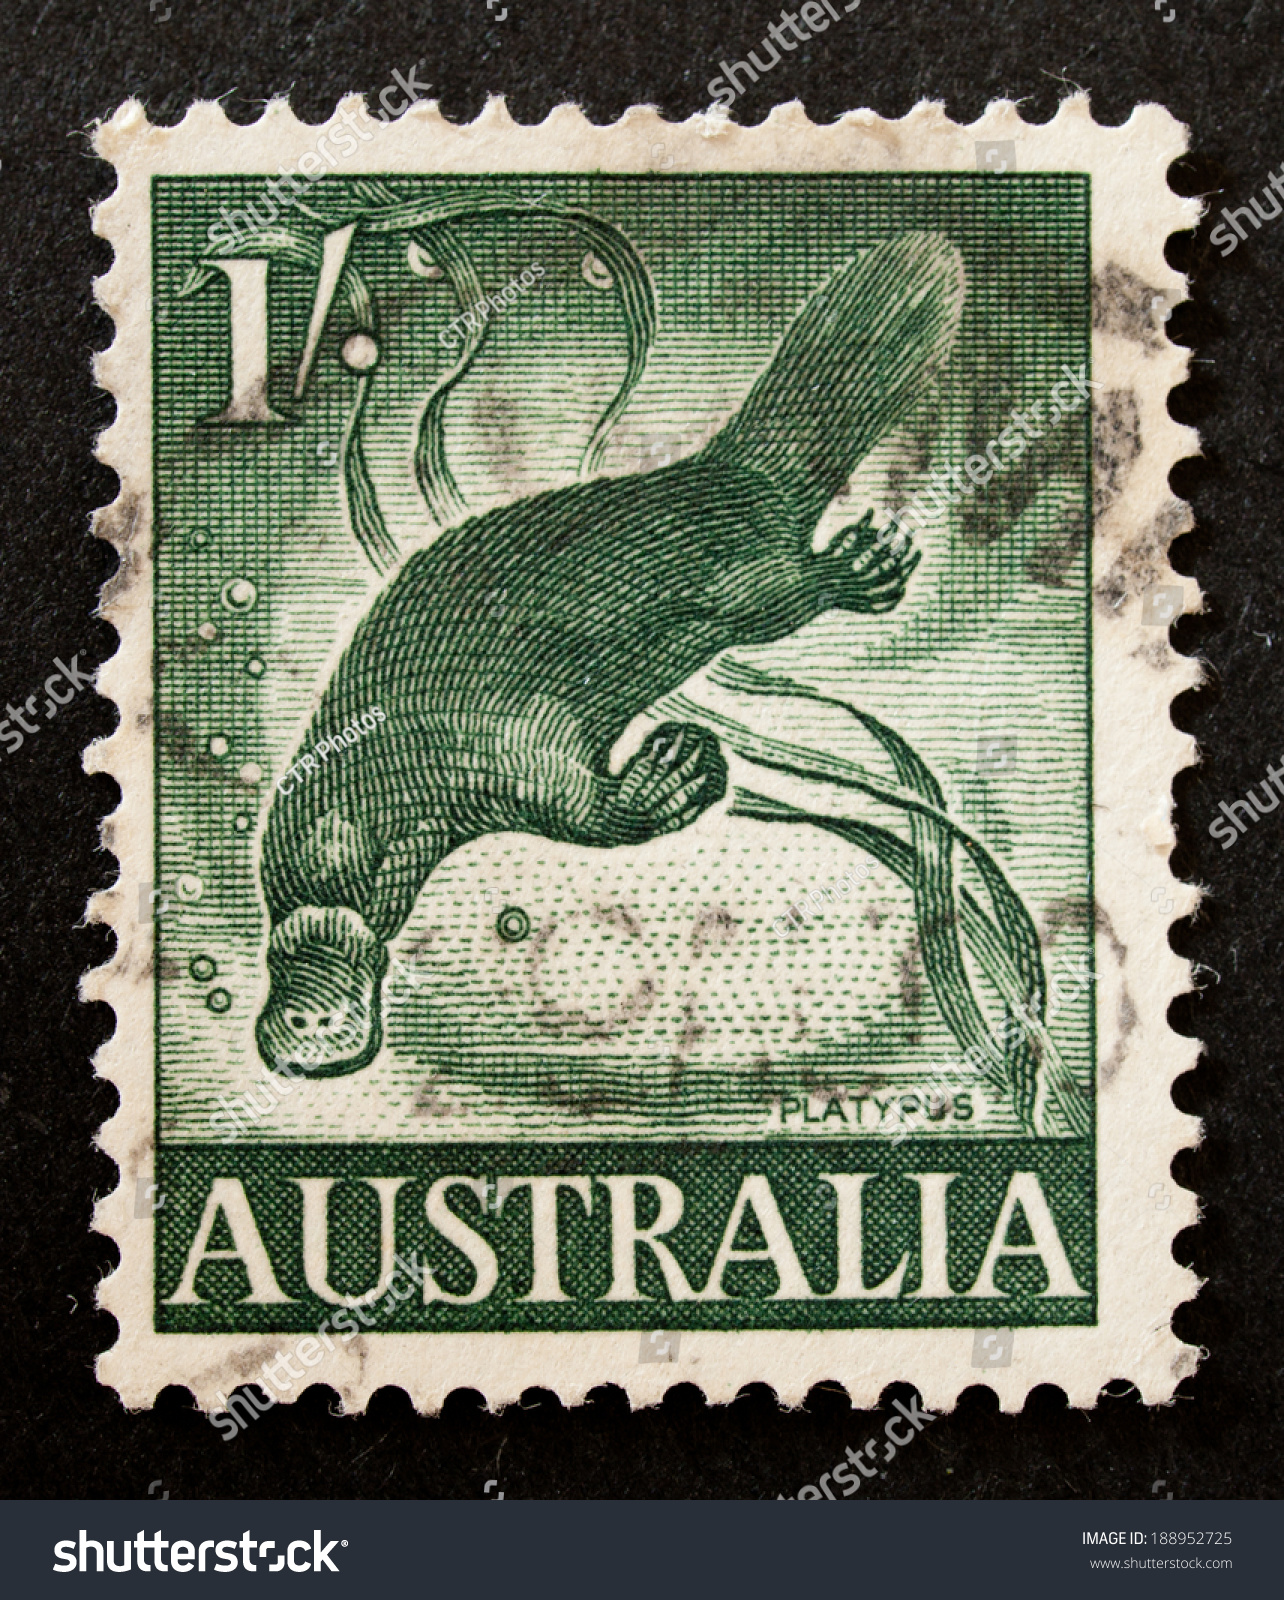 Australia Circa 1959a Cancelled Postage Stamp Stock Photo (Royalty ...